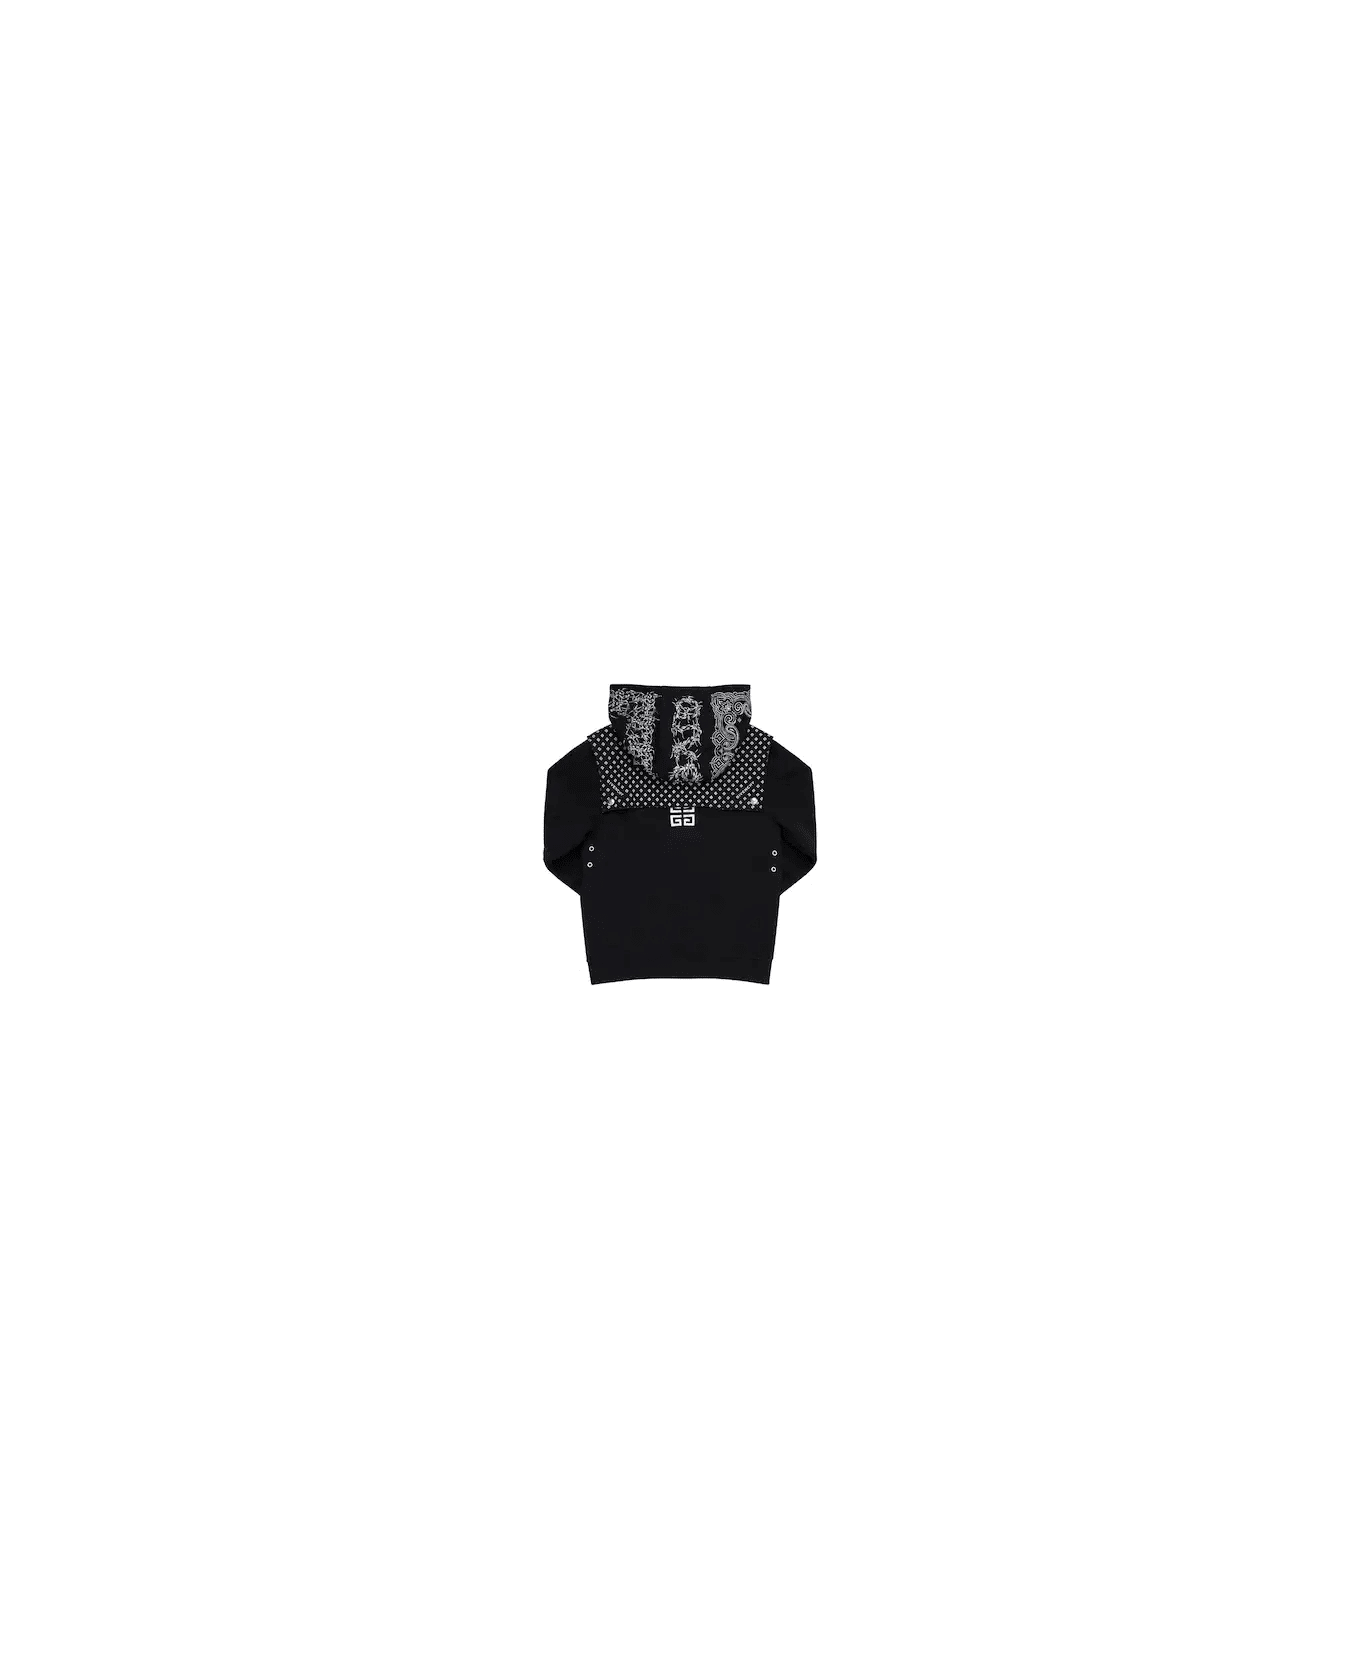 Givenchy Logo Sweatshirt - BLACK